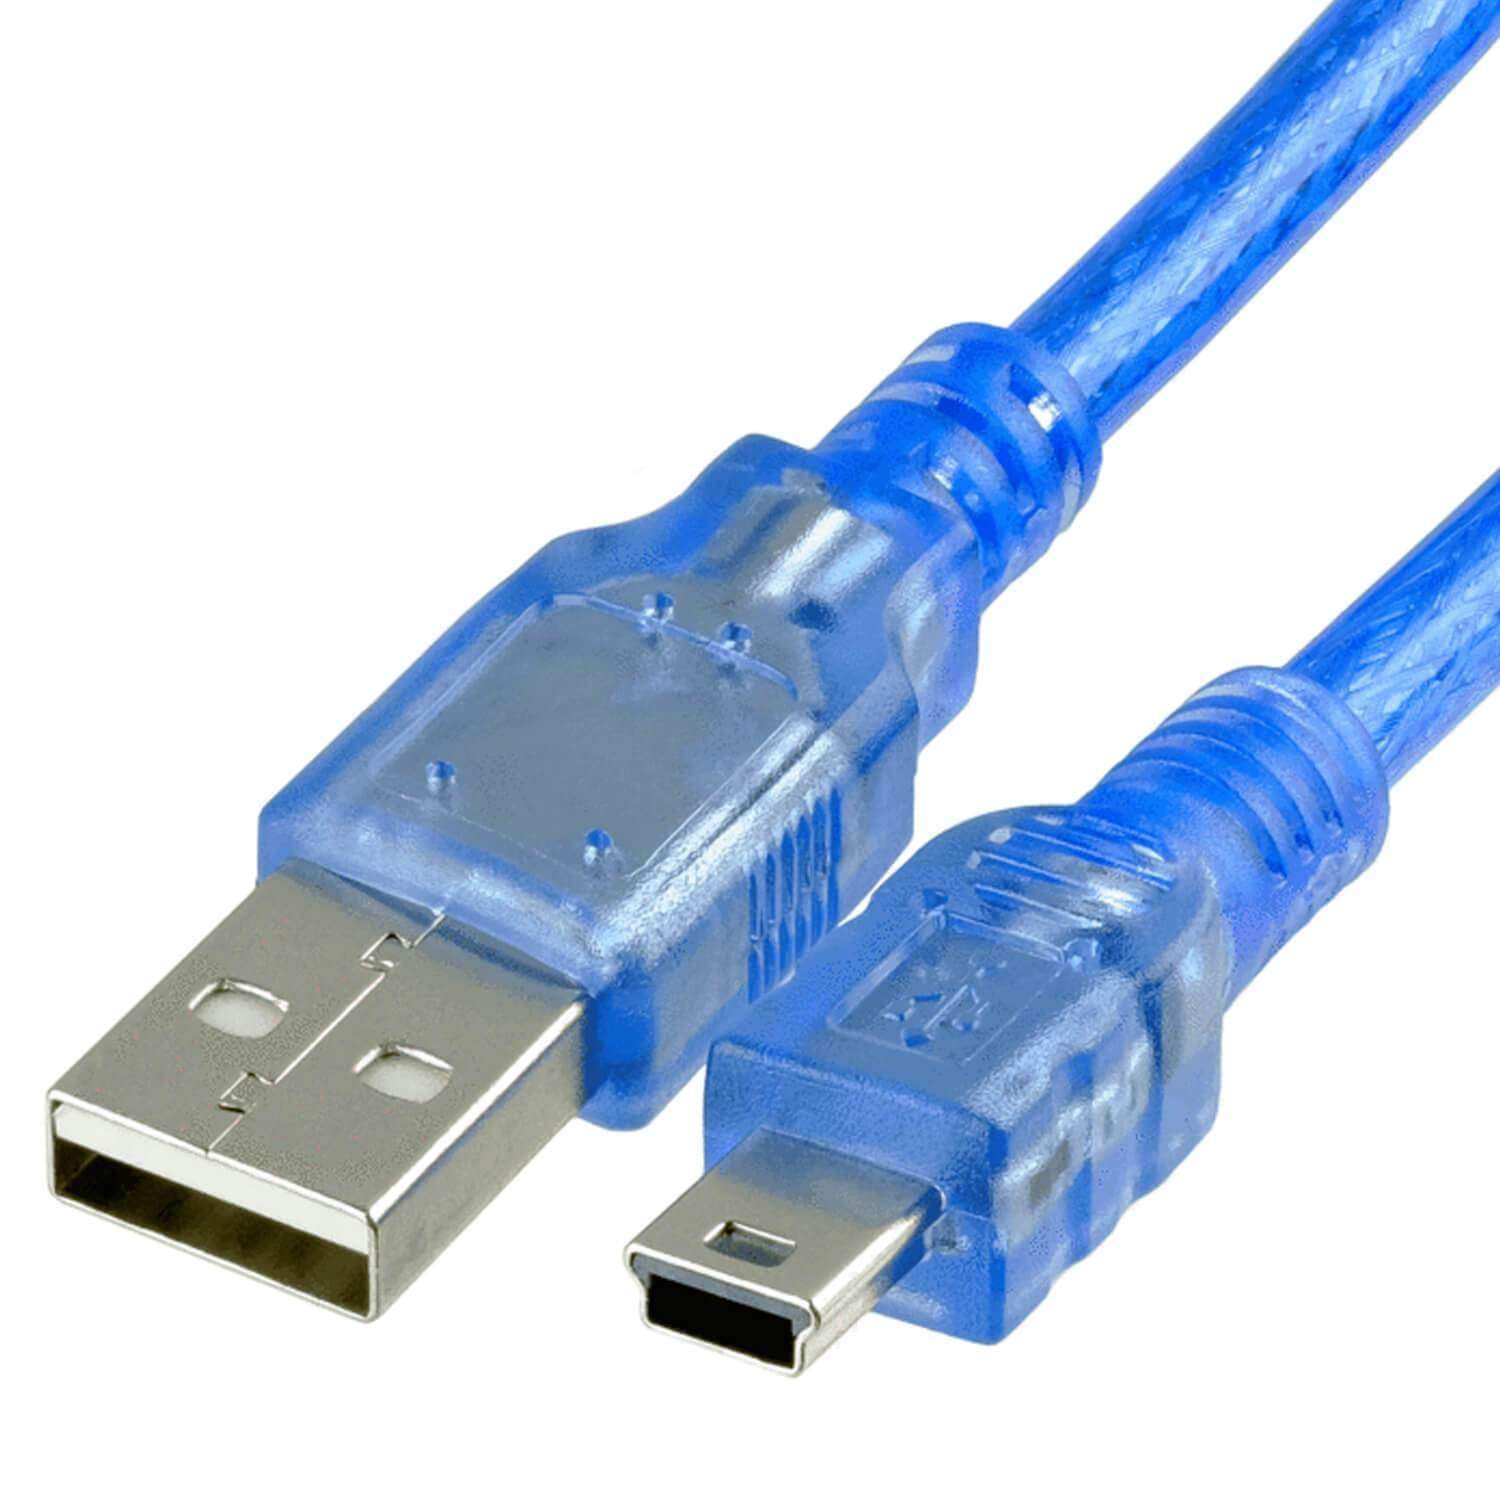 ReadyWired USB Cord Cable for Arduino UNO R3 Mega2560 Mega328 Nano